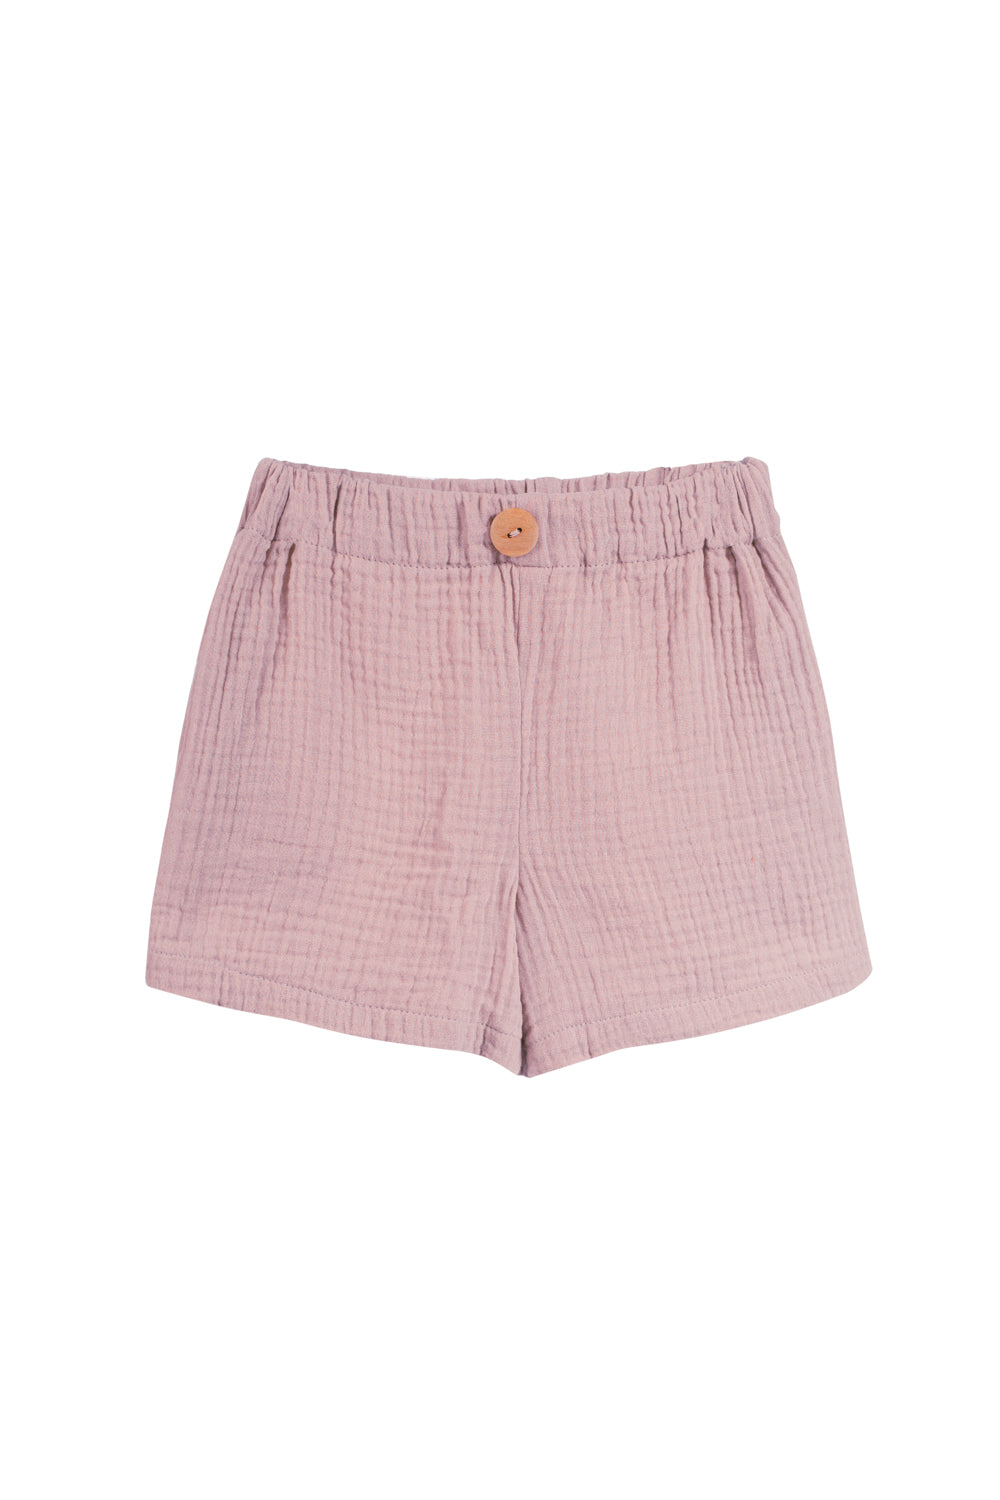 Zoo | lavender shorts